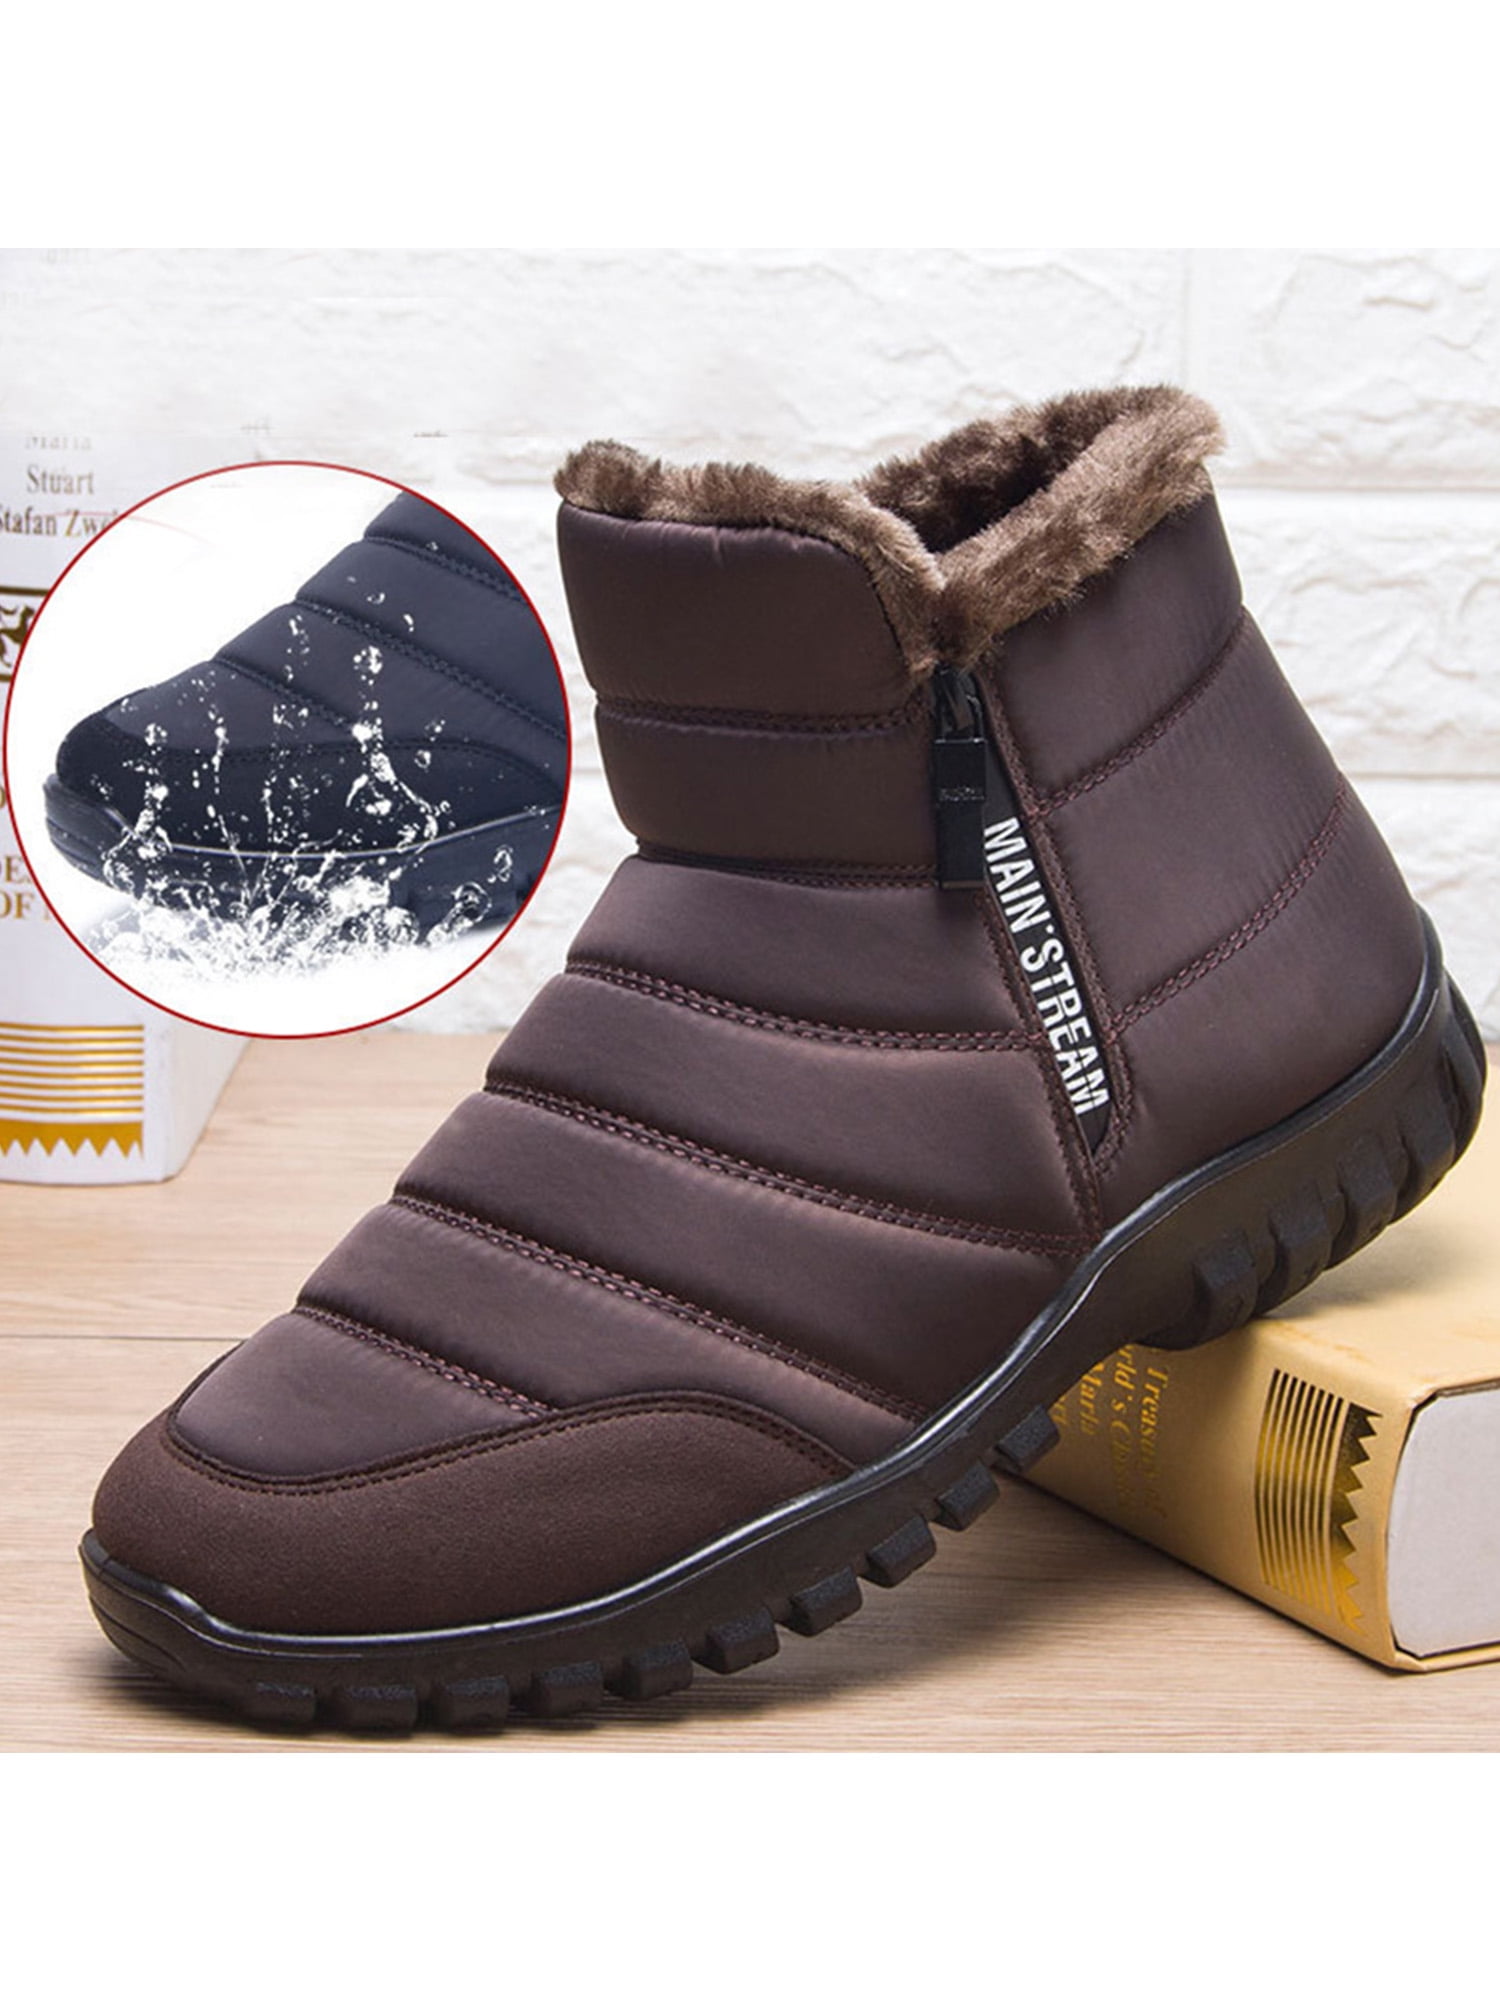 Men Boots Fur Warm Winter Snow Boots Hi Top Outdoor Walking Sneakers Shoes New 